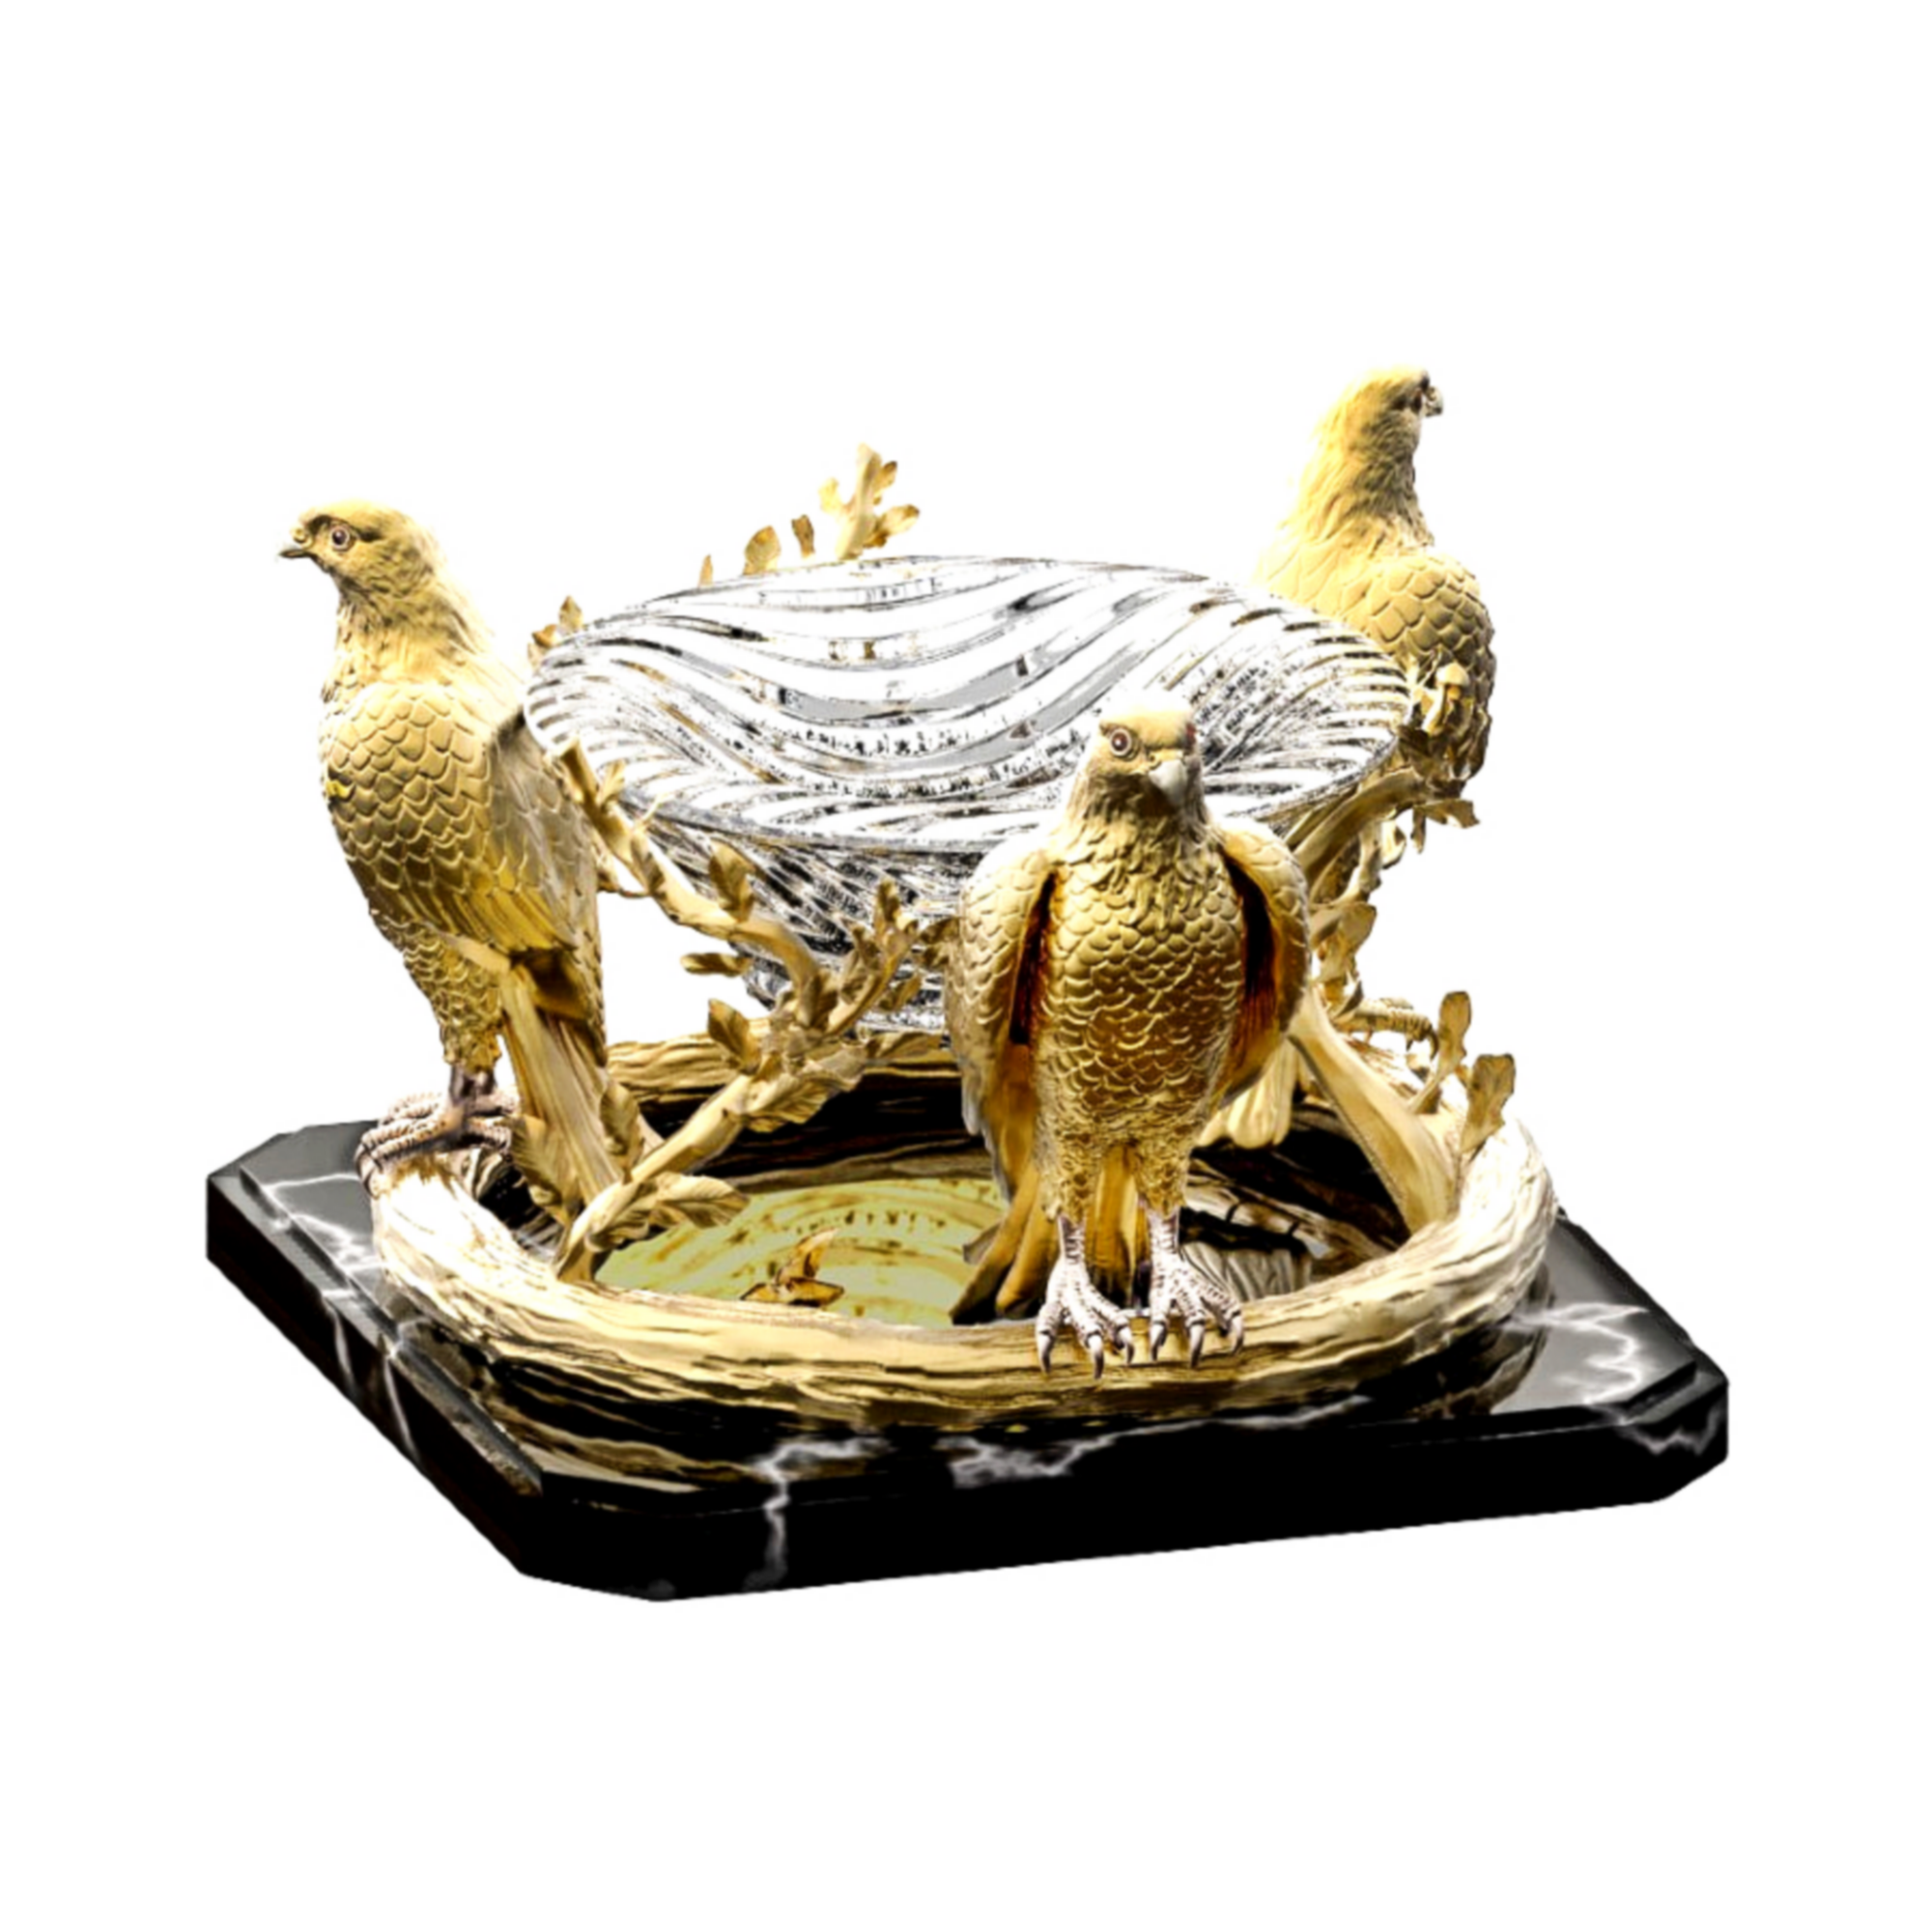 Ambrosia - Luxury Golden Bowl from Natalis - Emozioni d'Arte